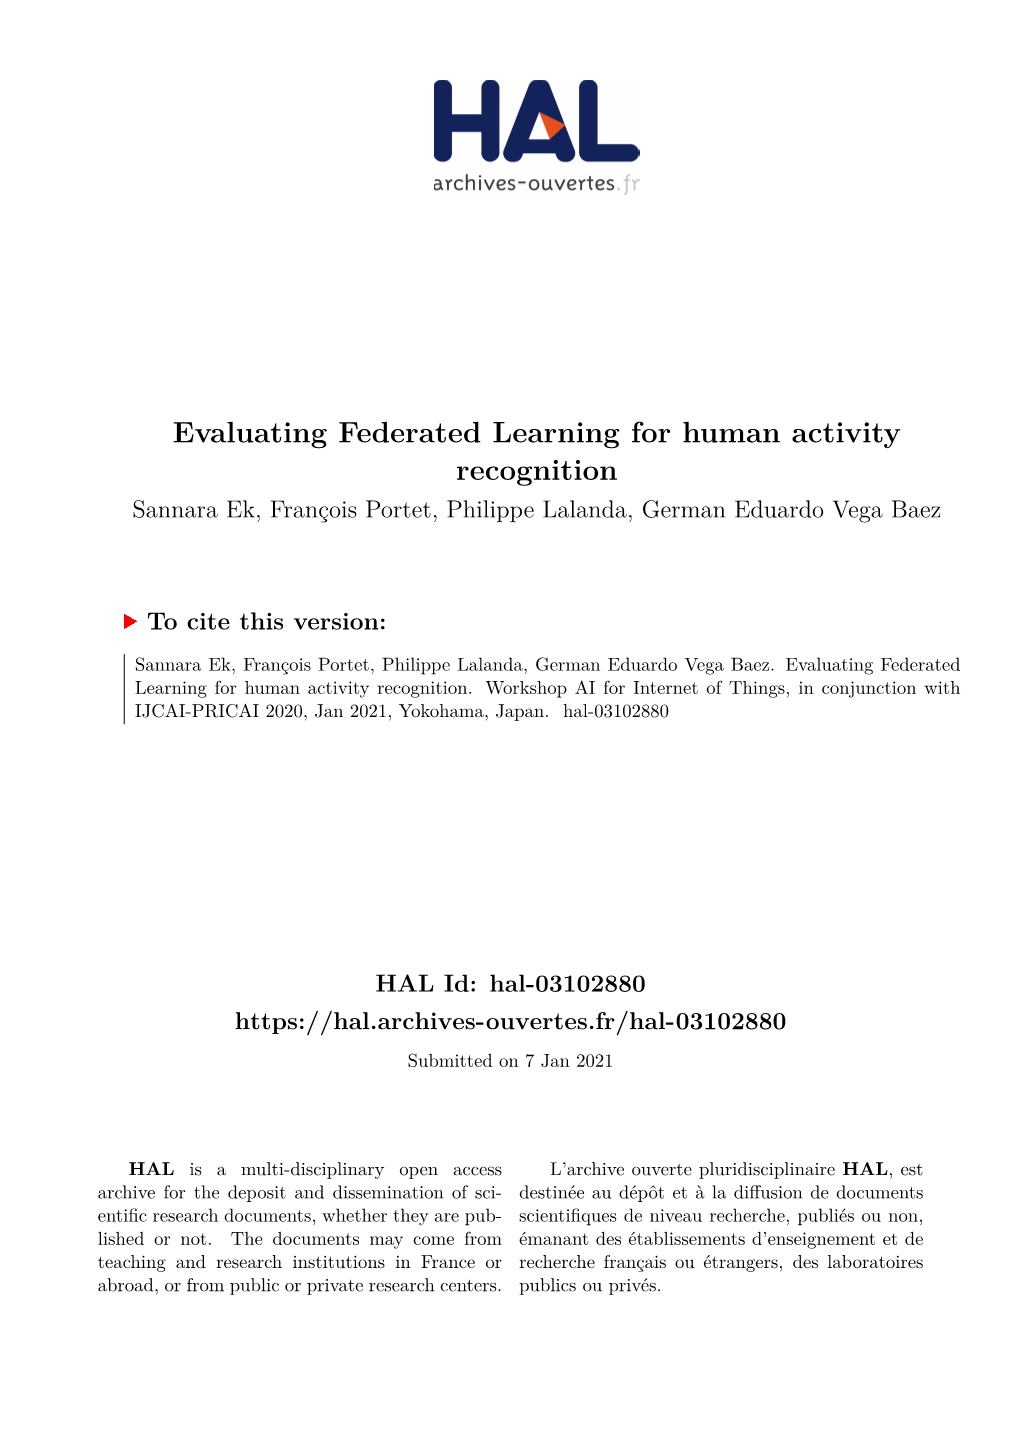 Evaluating Federated Learning for Human Activity Recognition Sannara Ek, François Portet, Philippe Lalanda, German Eduardo Vega Baez